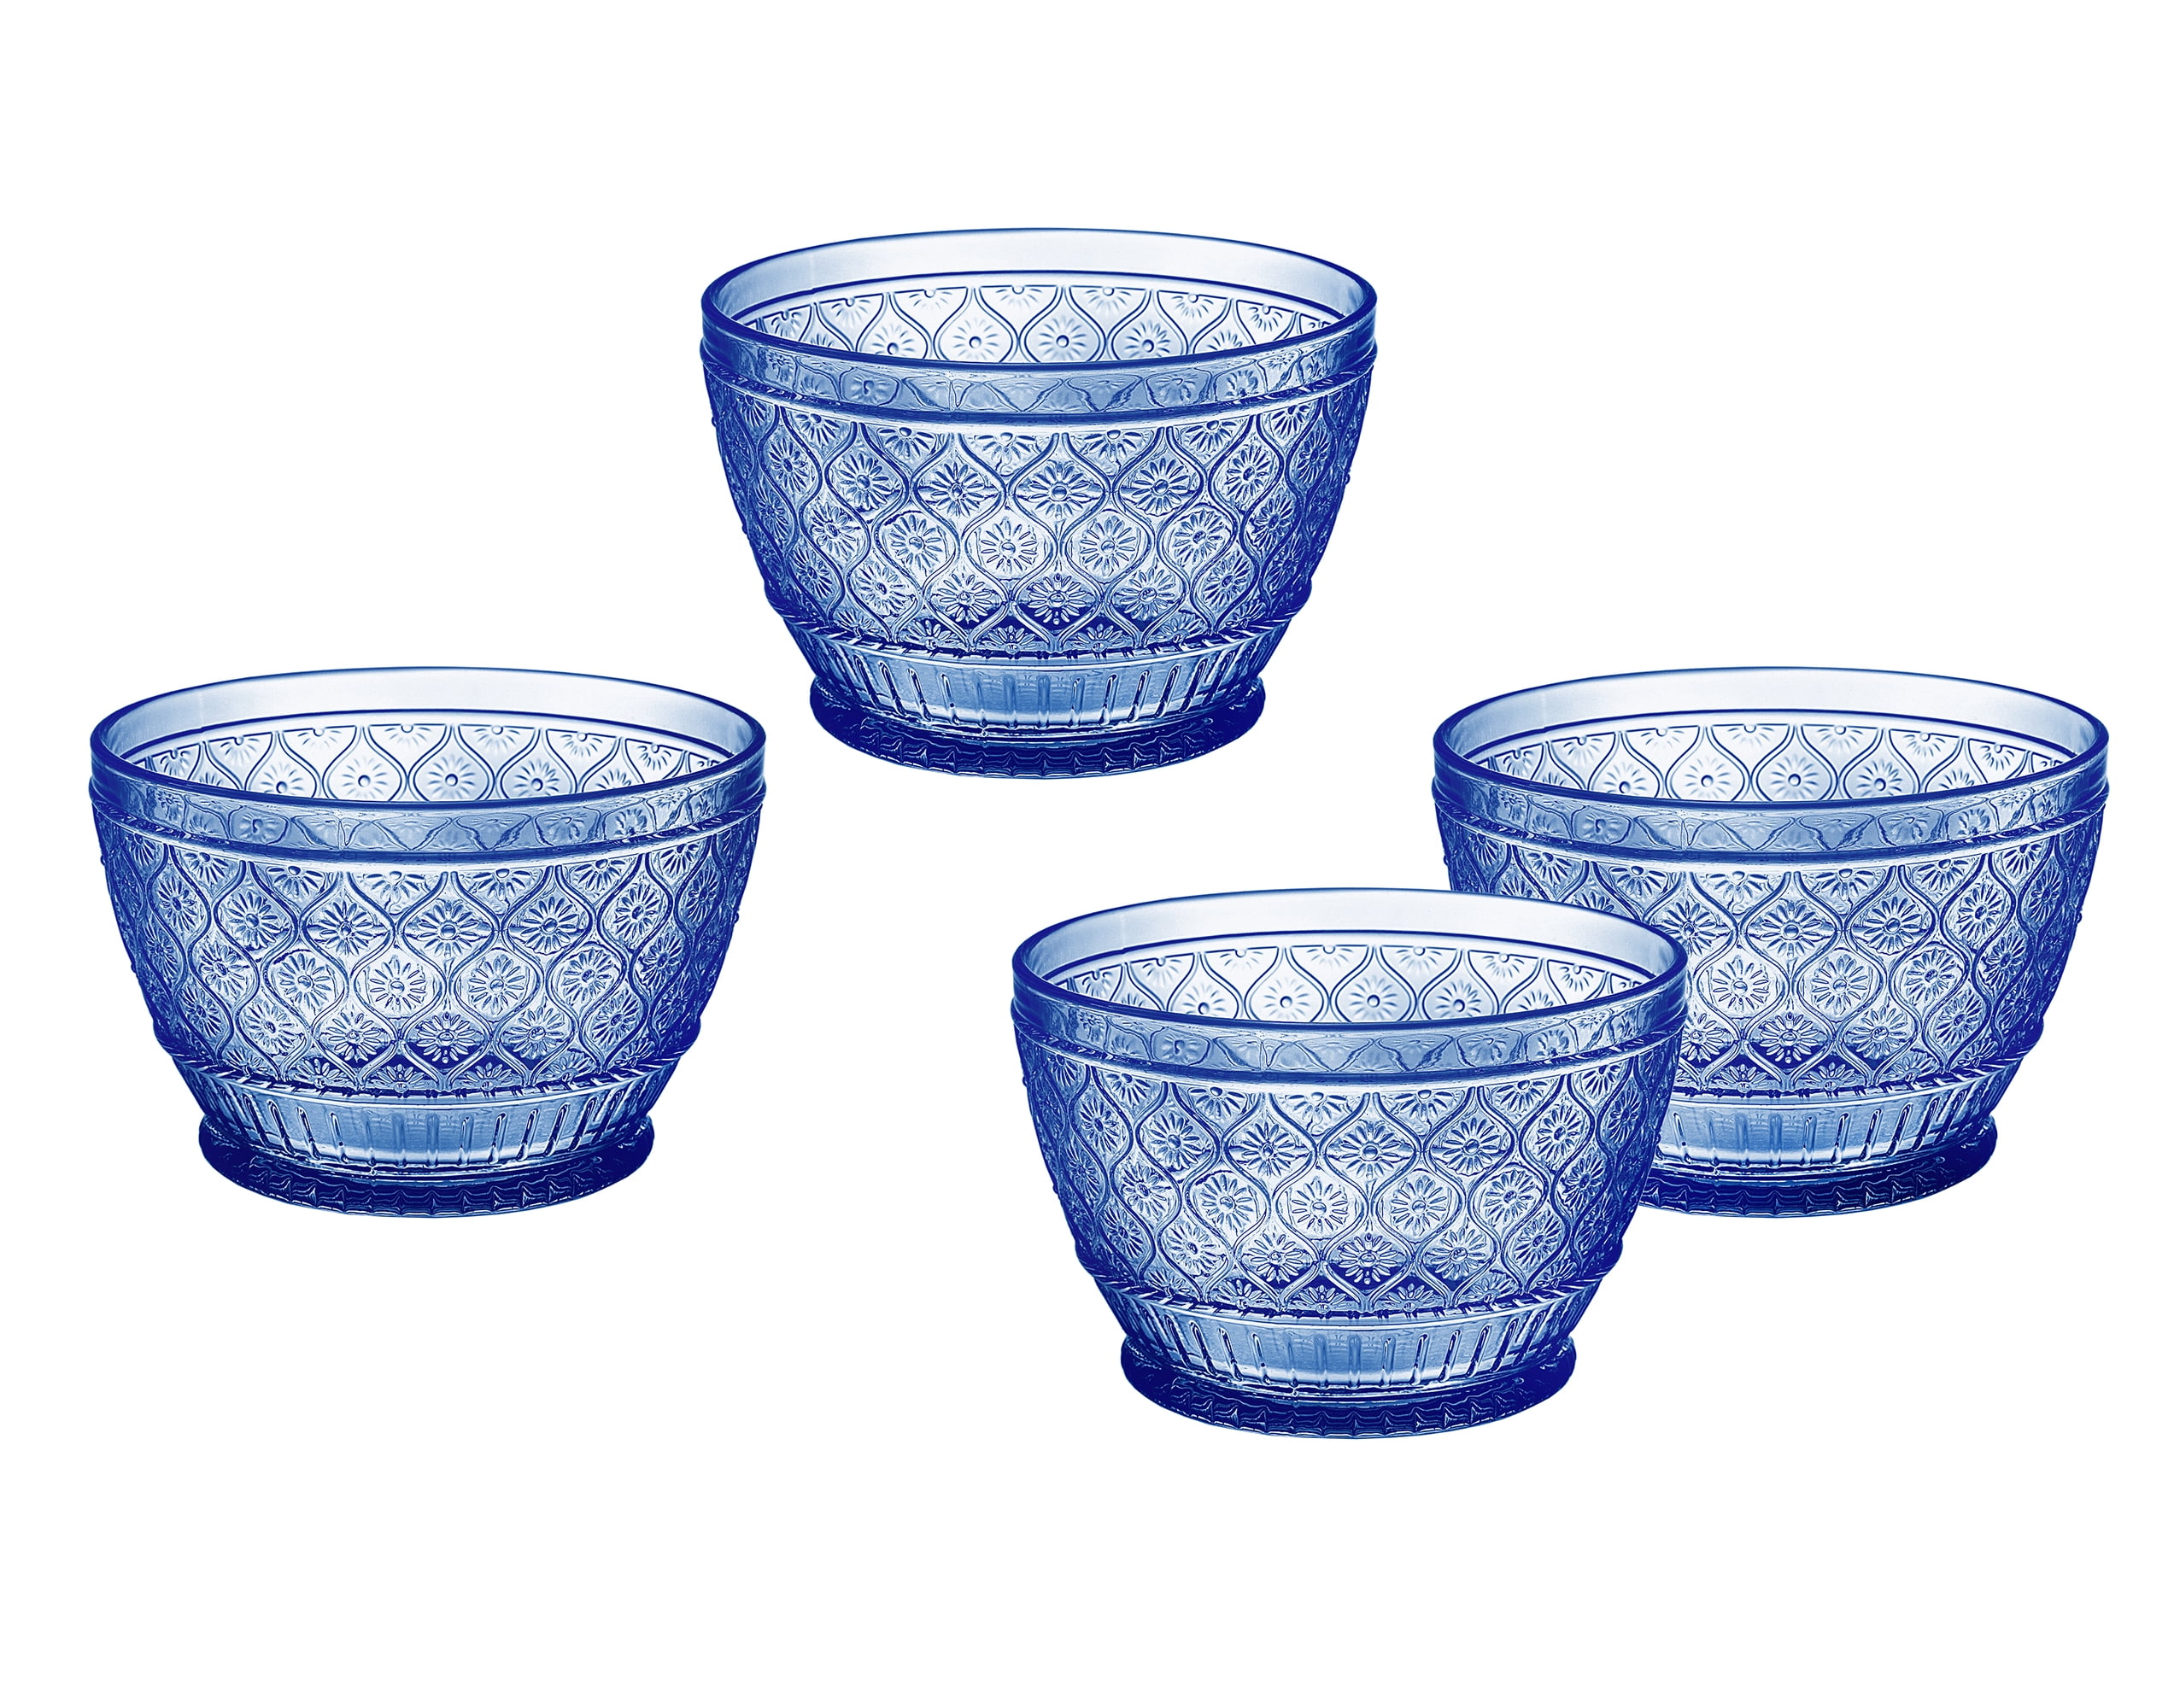 Godinger godinger mixing bowls with lids, plastic nesting bowls